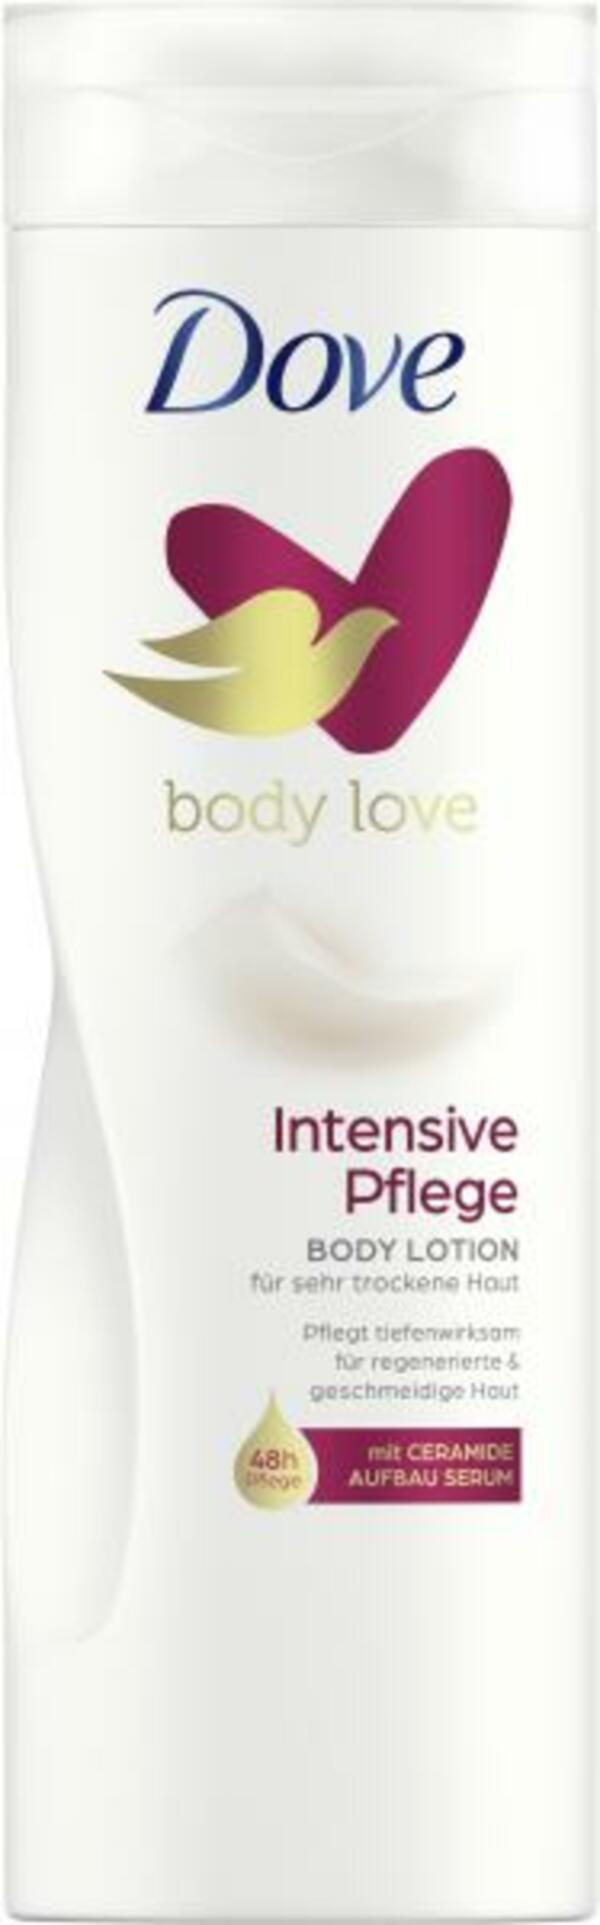 Bild 1 von Dove Body love Intensive Pflege Body Lotion